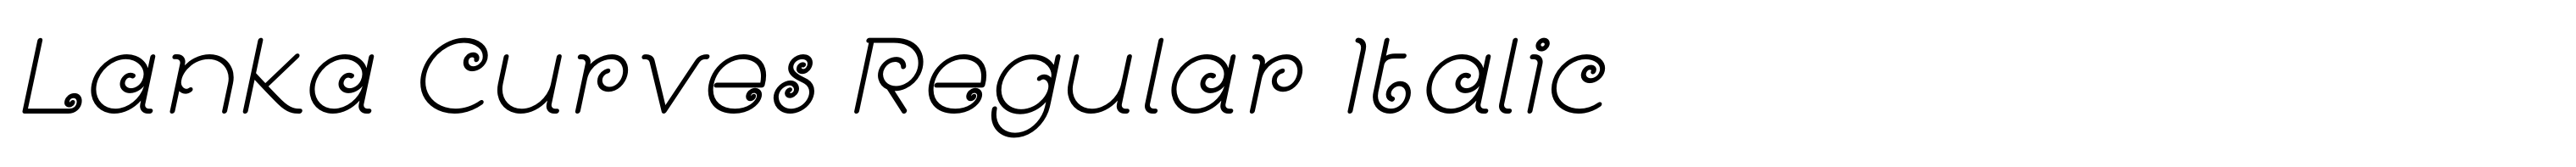 Lanka Curves Regular Italic